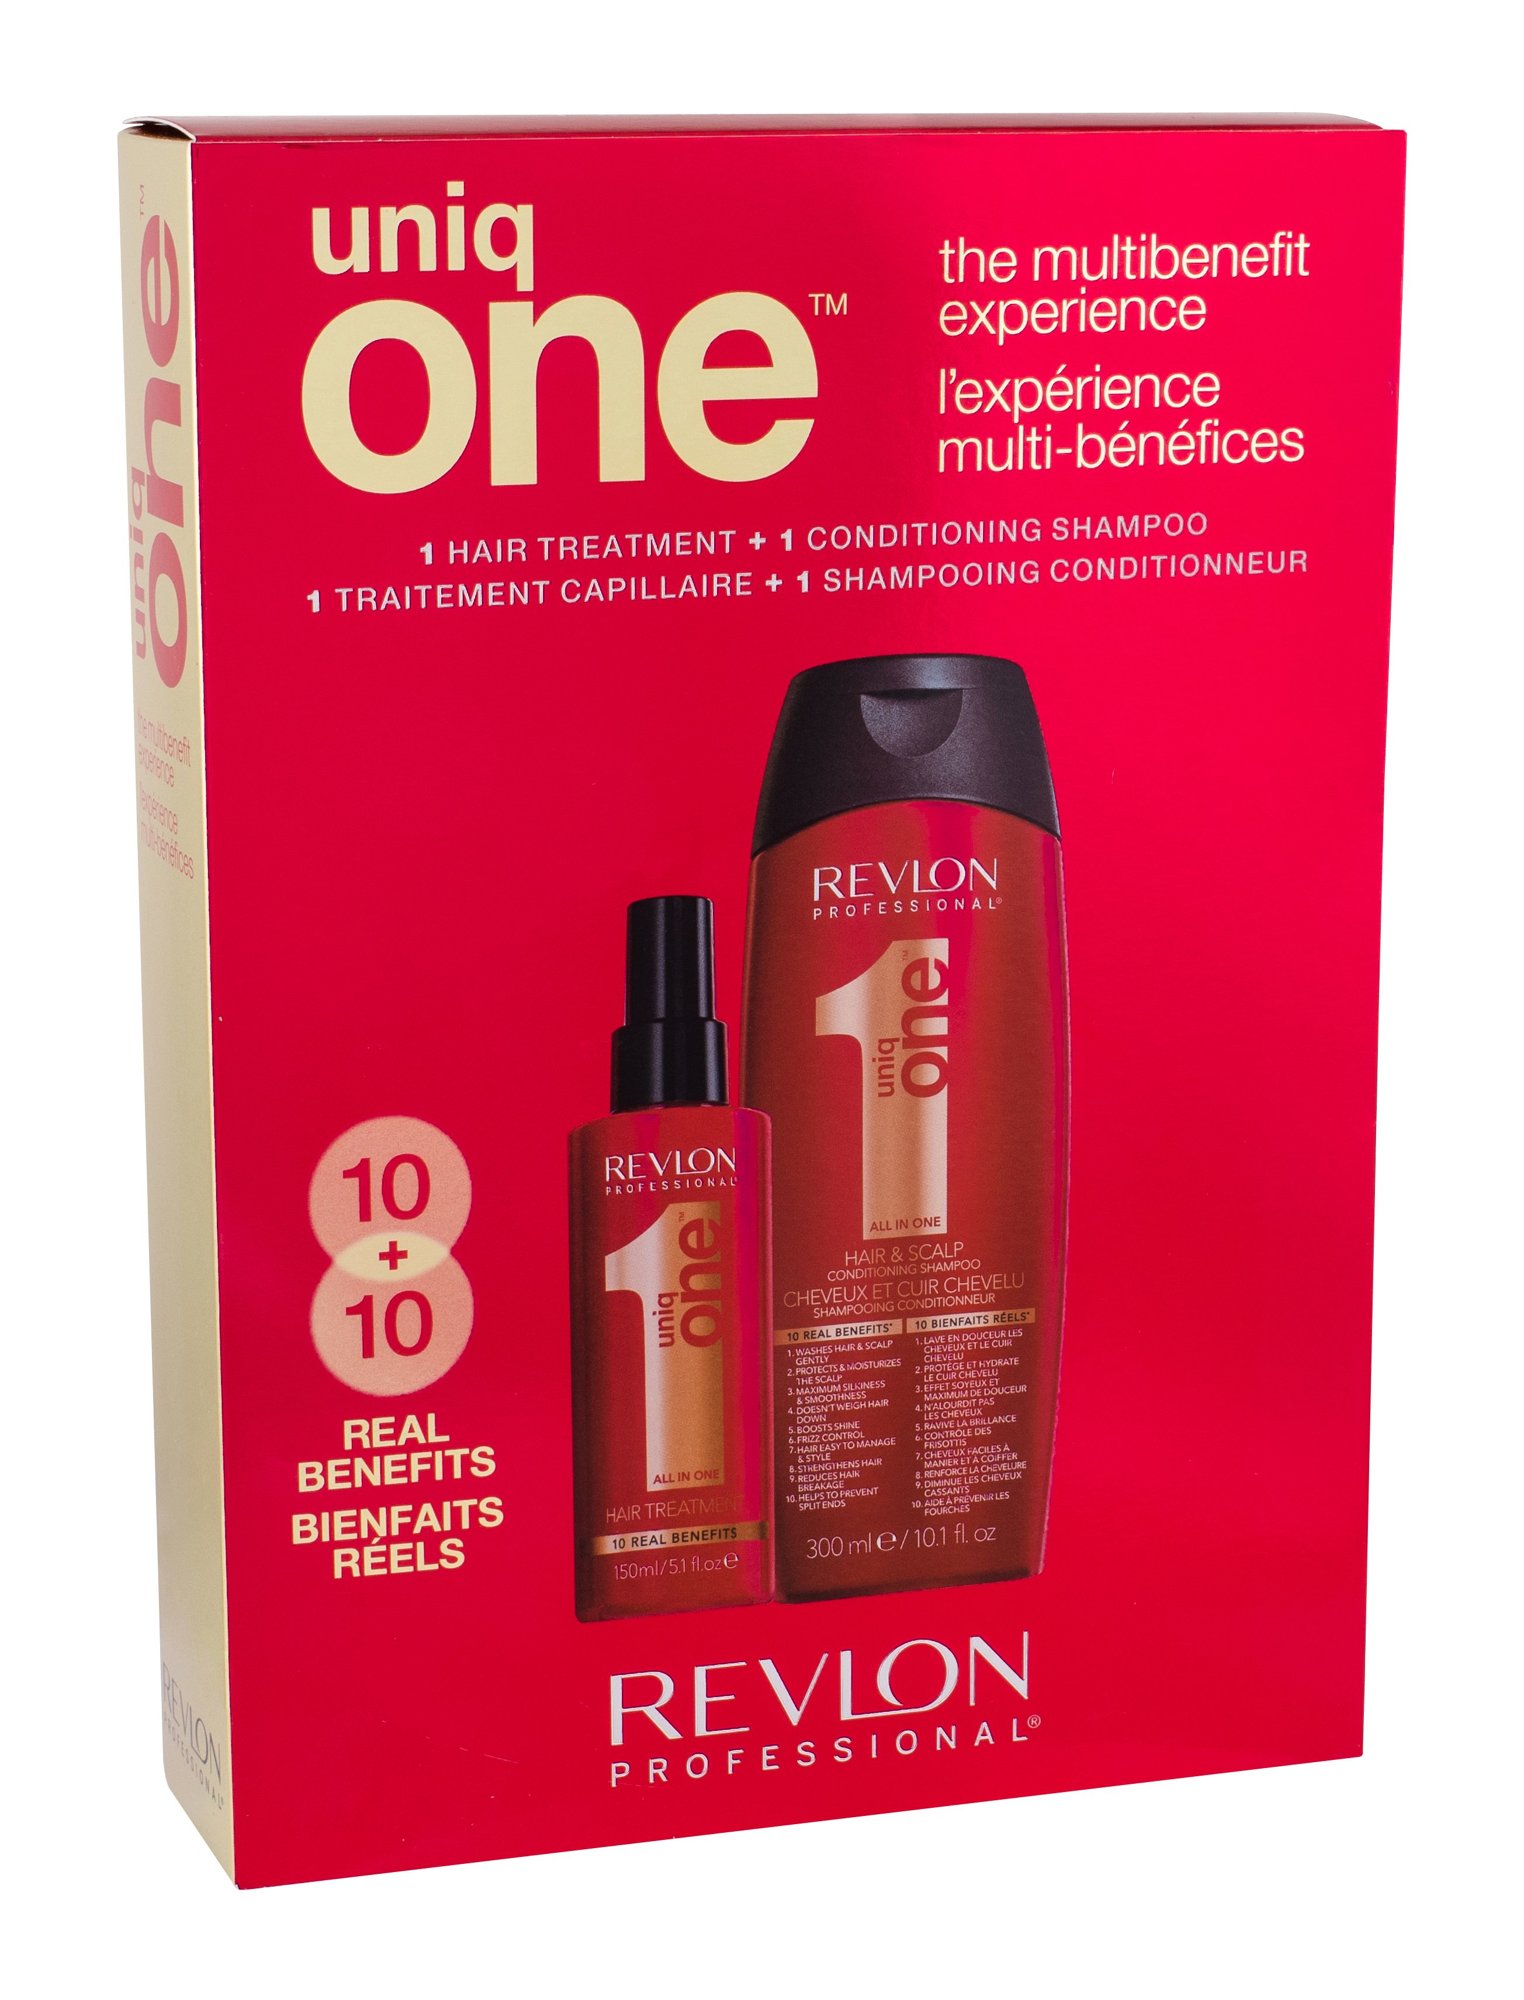 Revlon Professional Uniq One Duo Kit